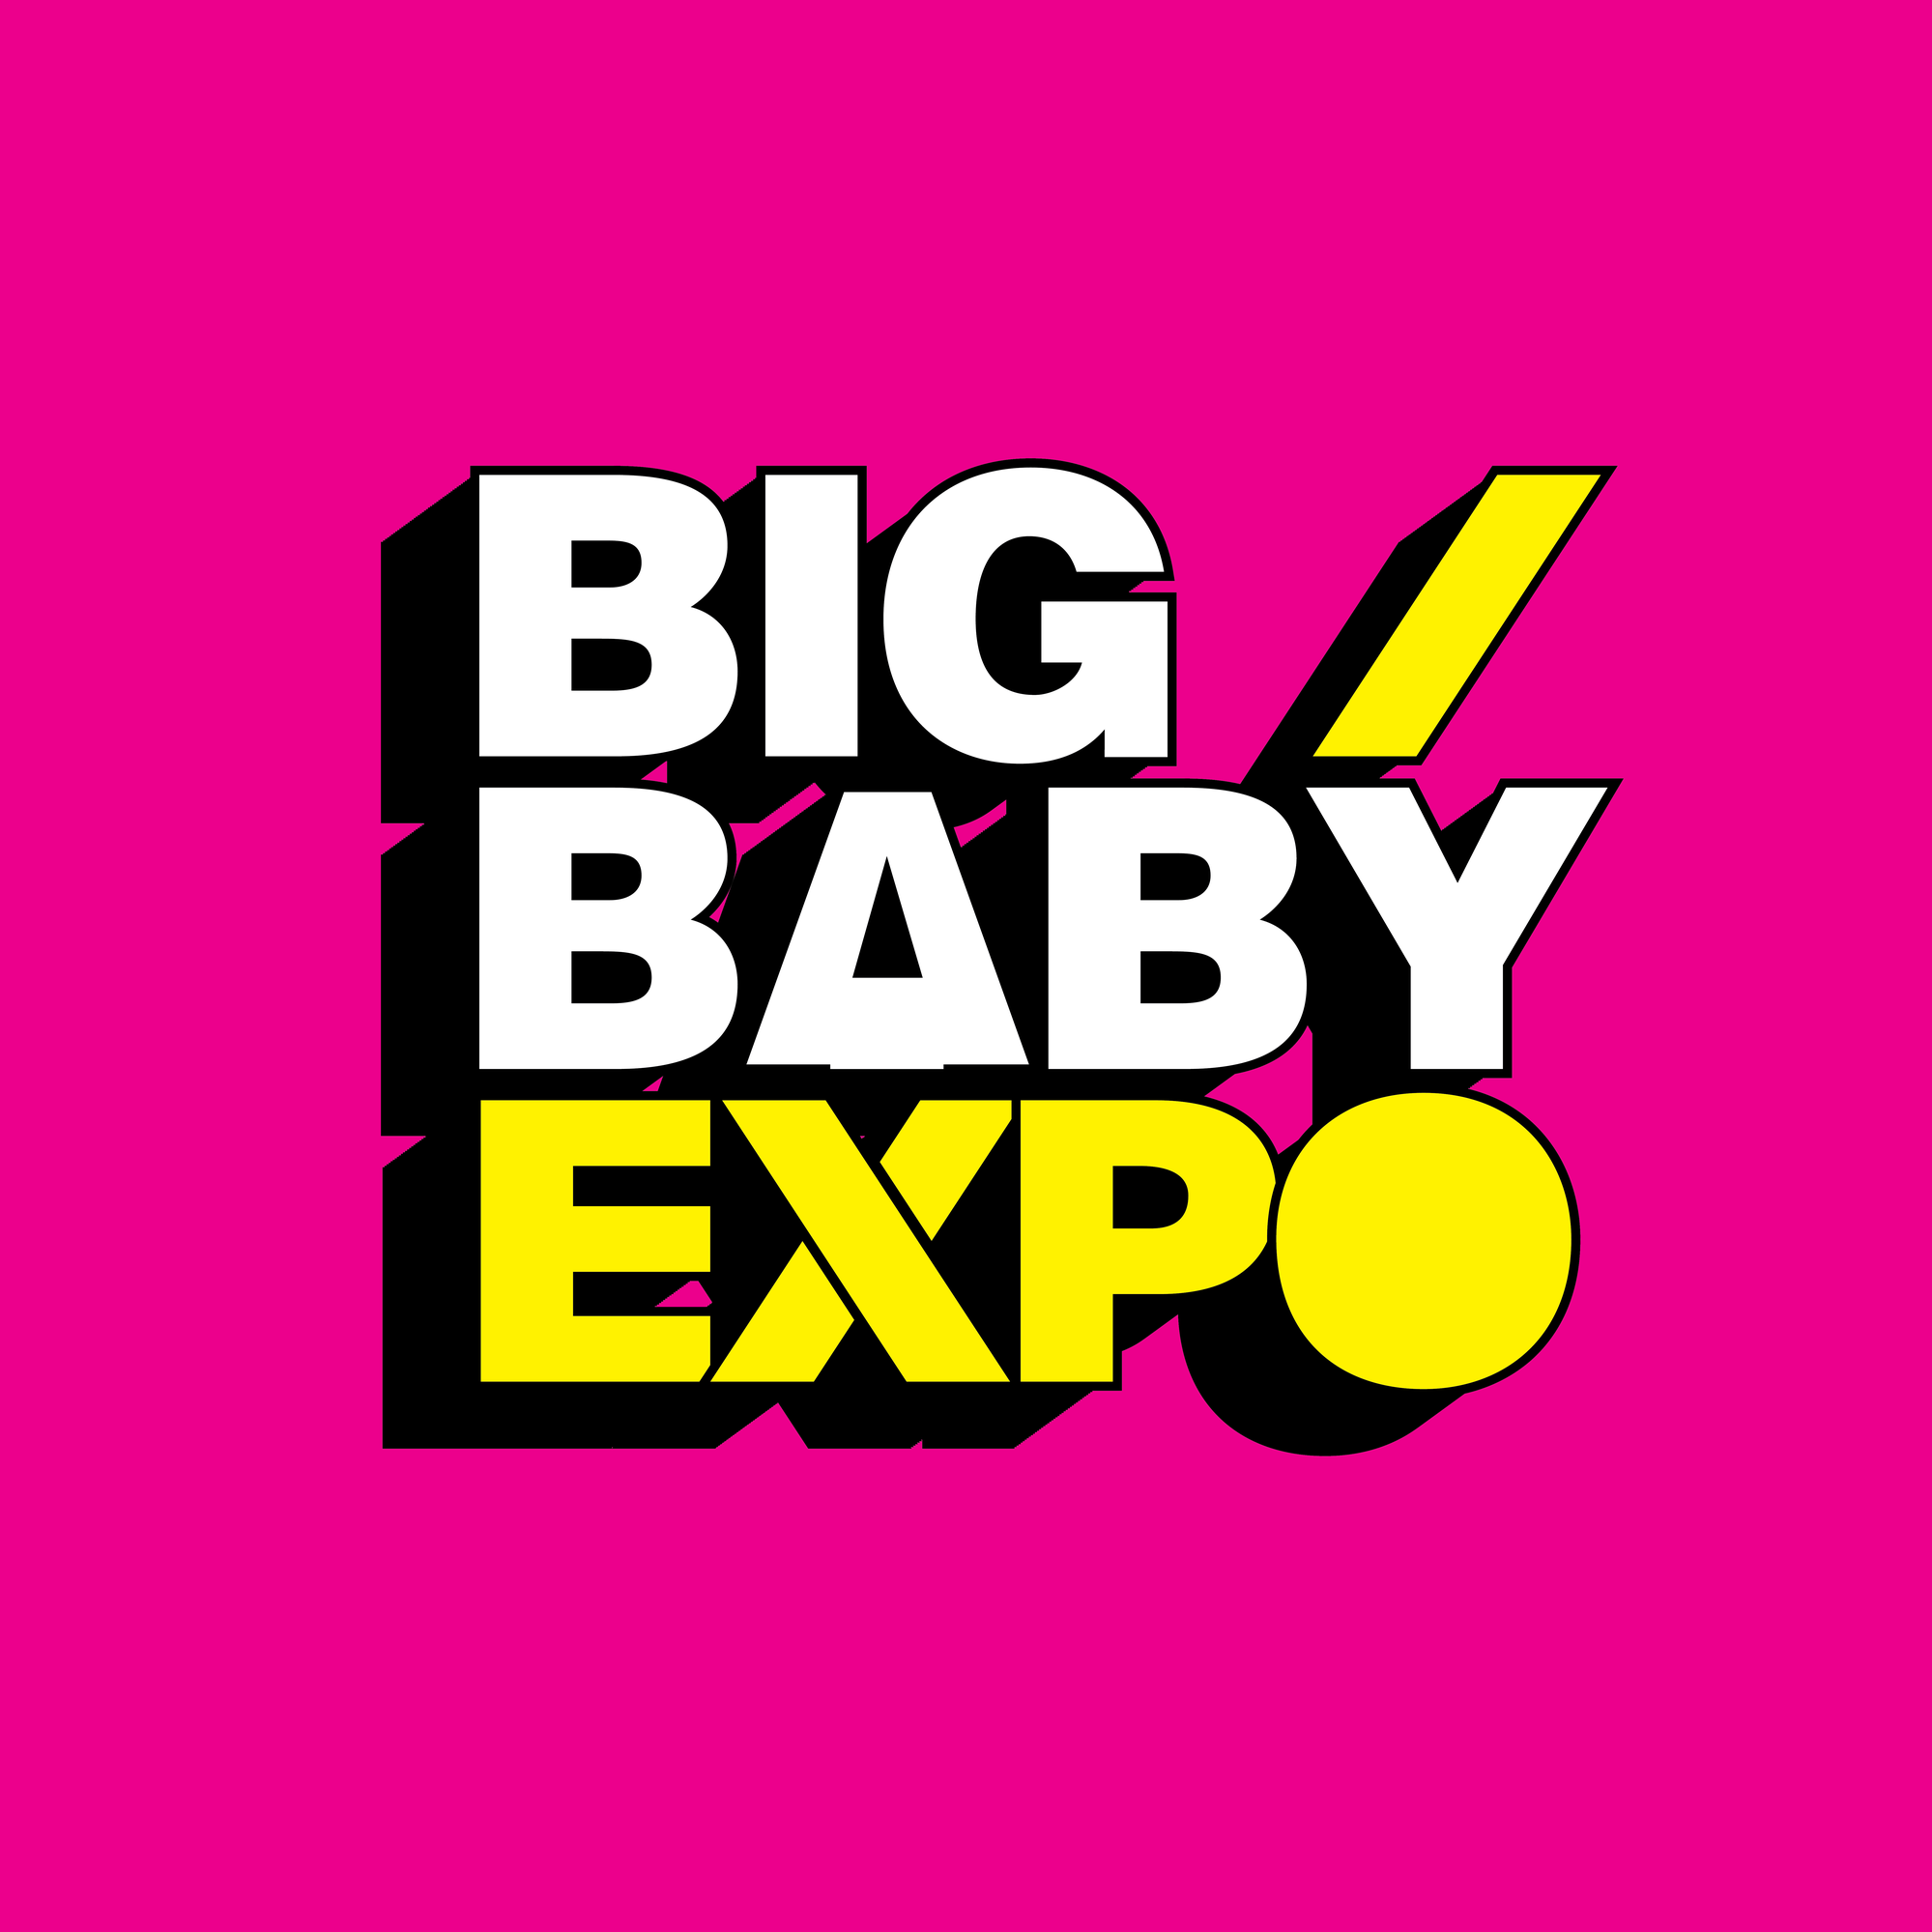 BIG Baby Expo, Kuala Lumpur, Malaysia